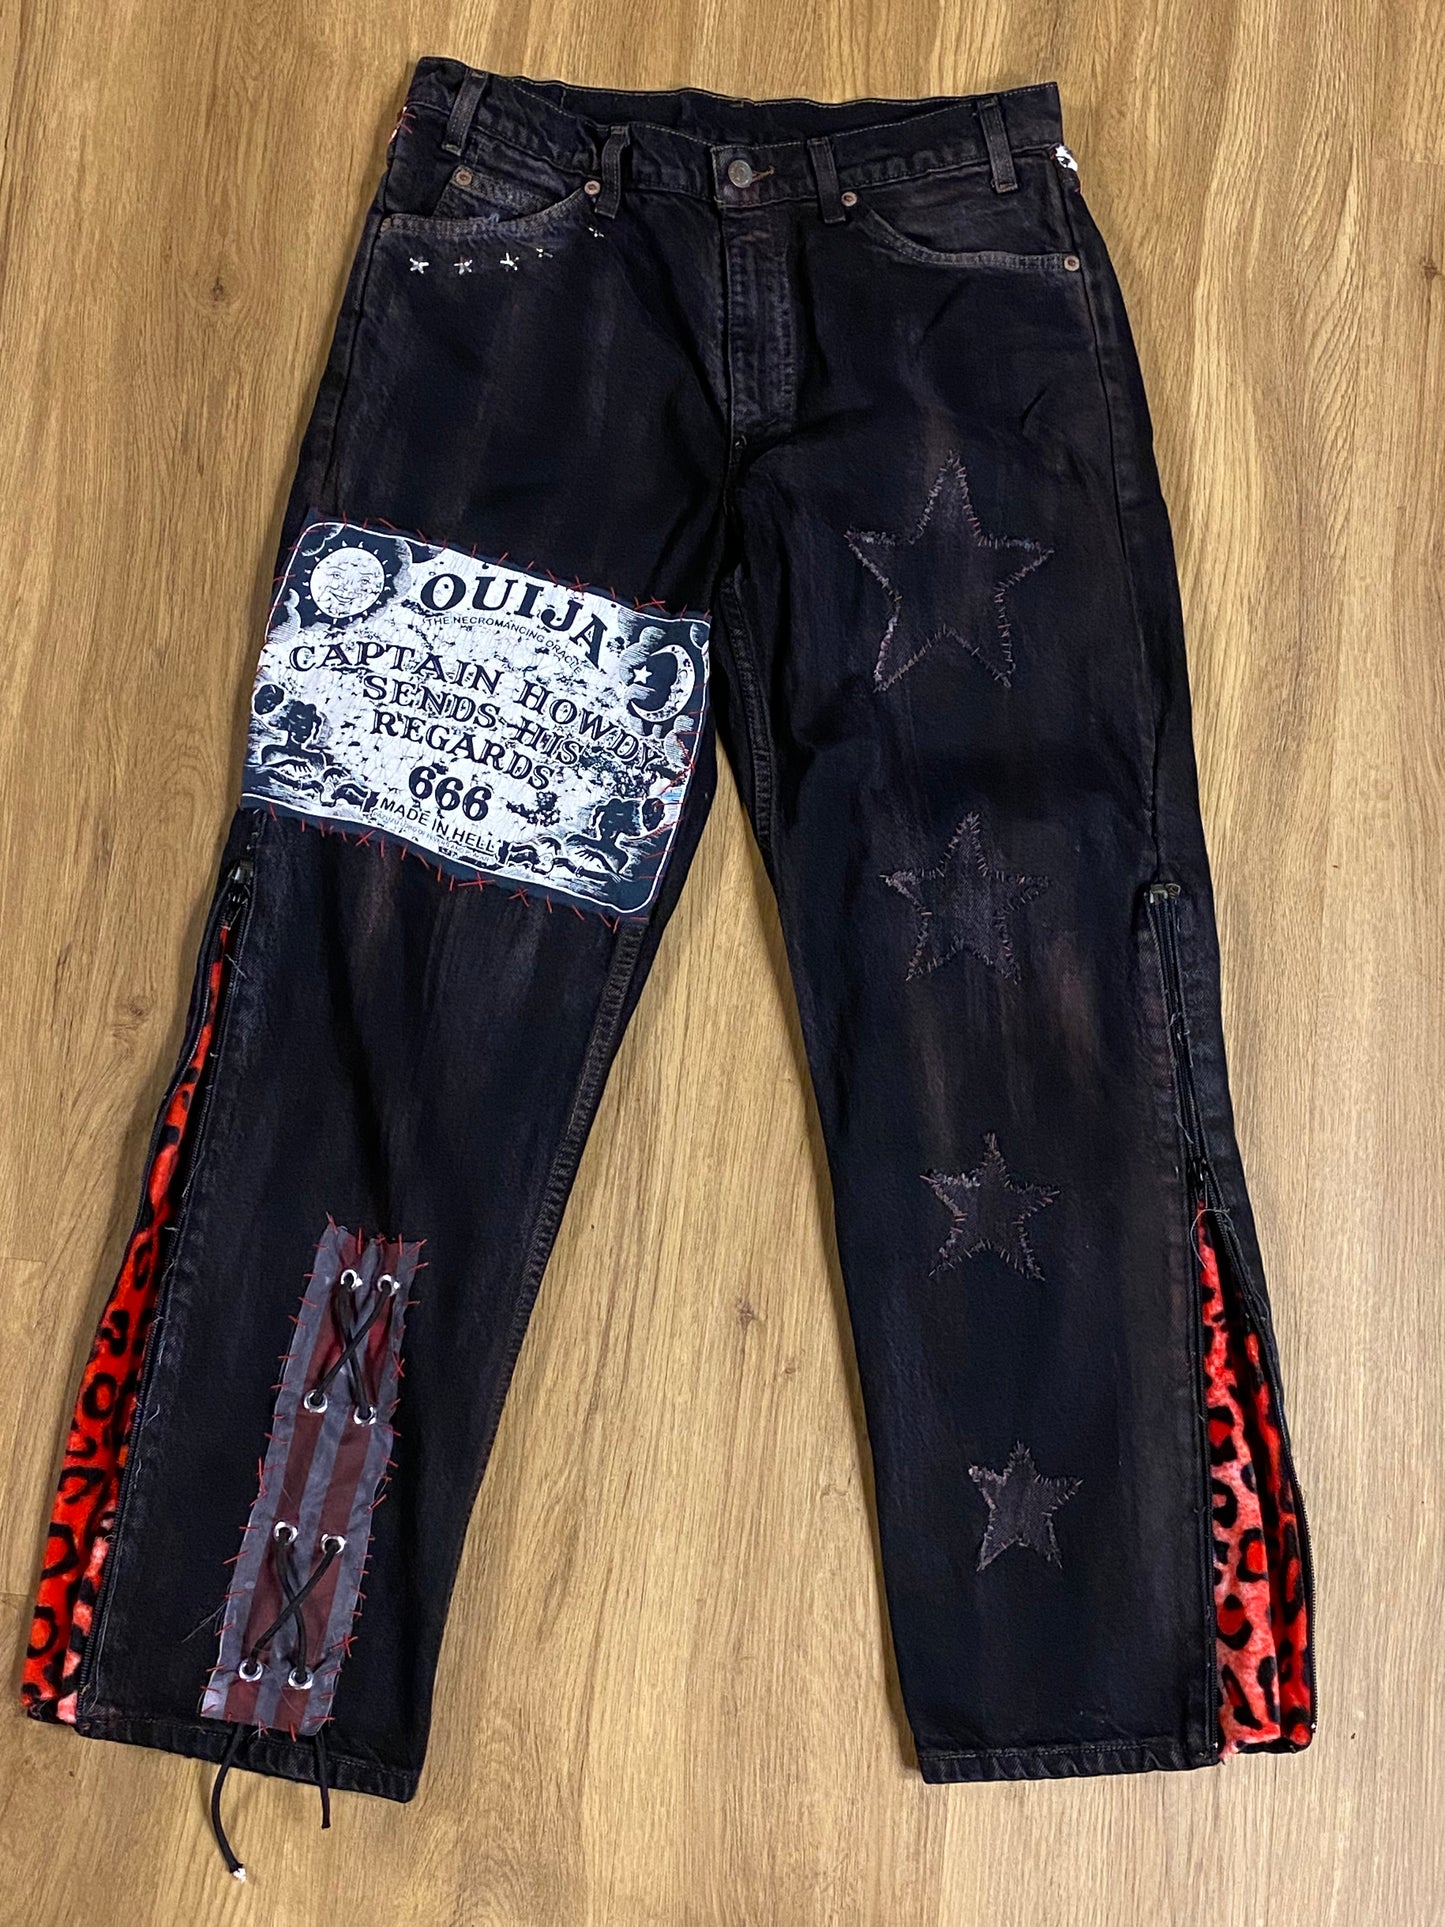 Purgatory Custom Clothing One Of A Kind Denim Jeans